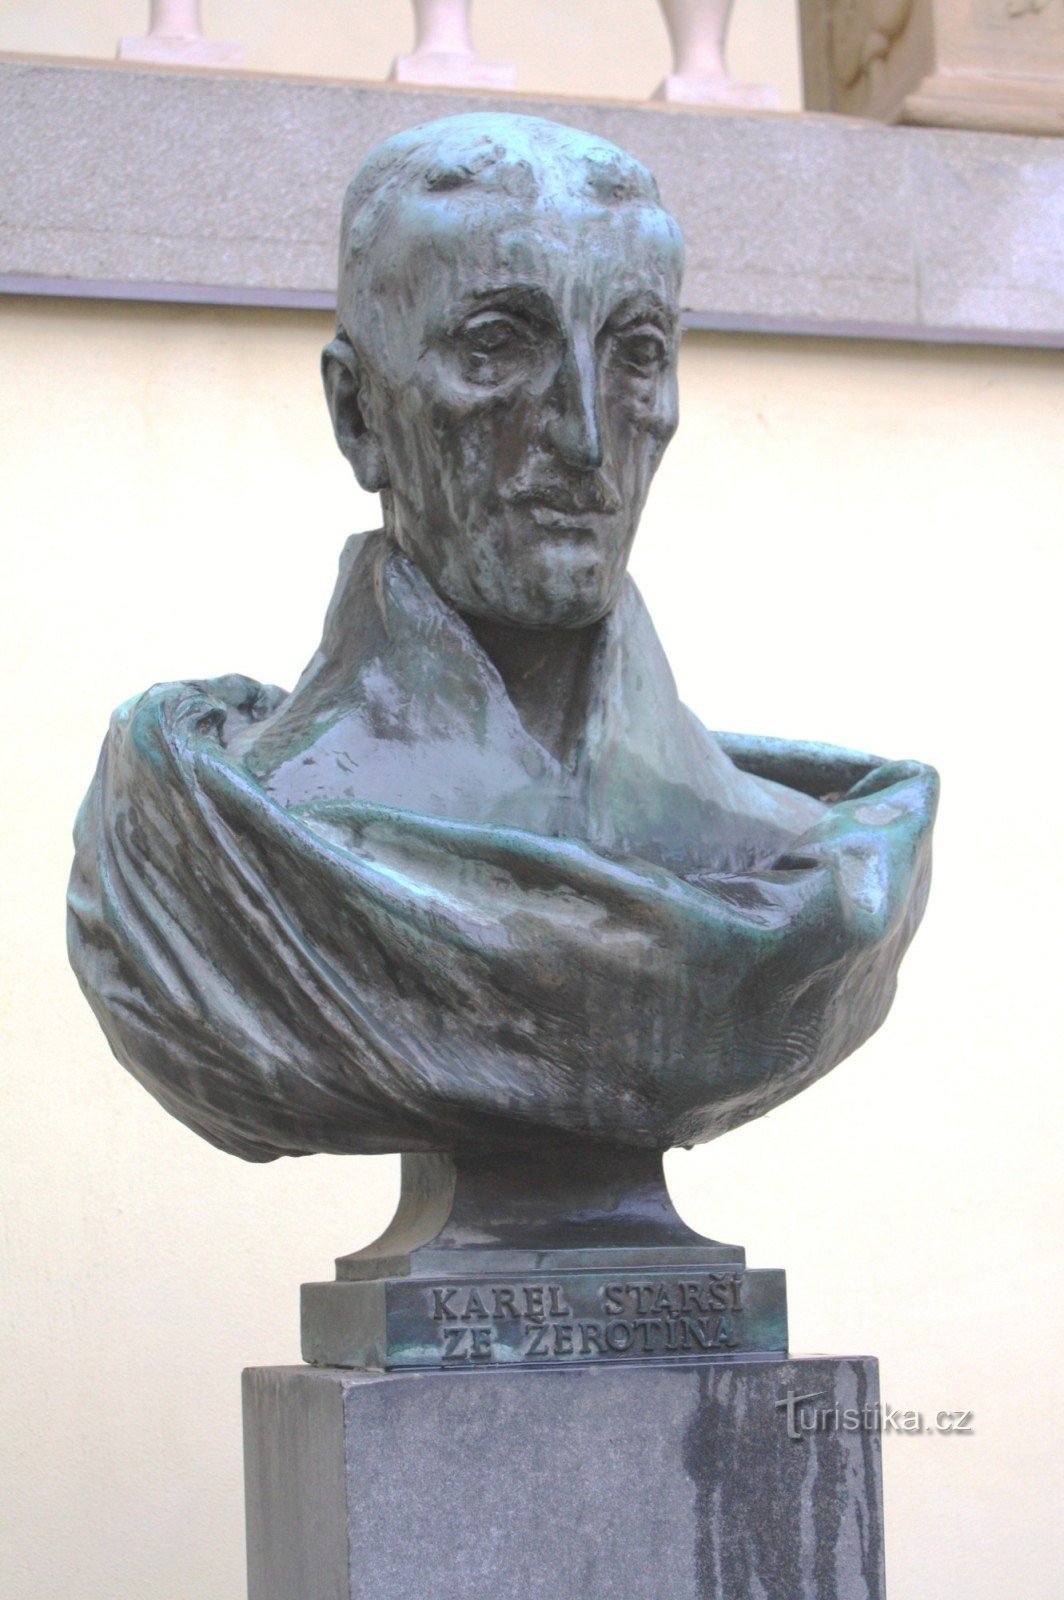 Brno - bustul lui Karel Starší din Žerotín